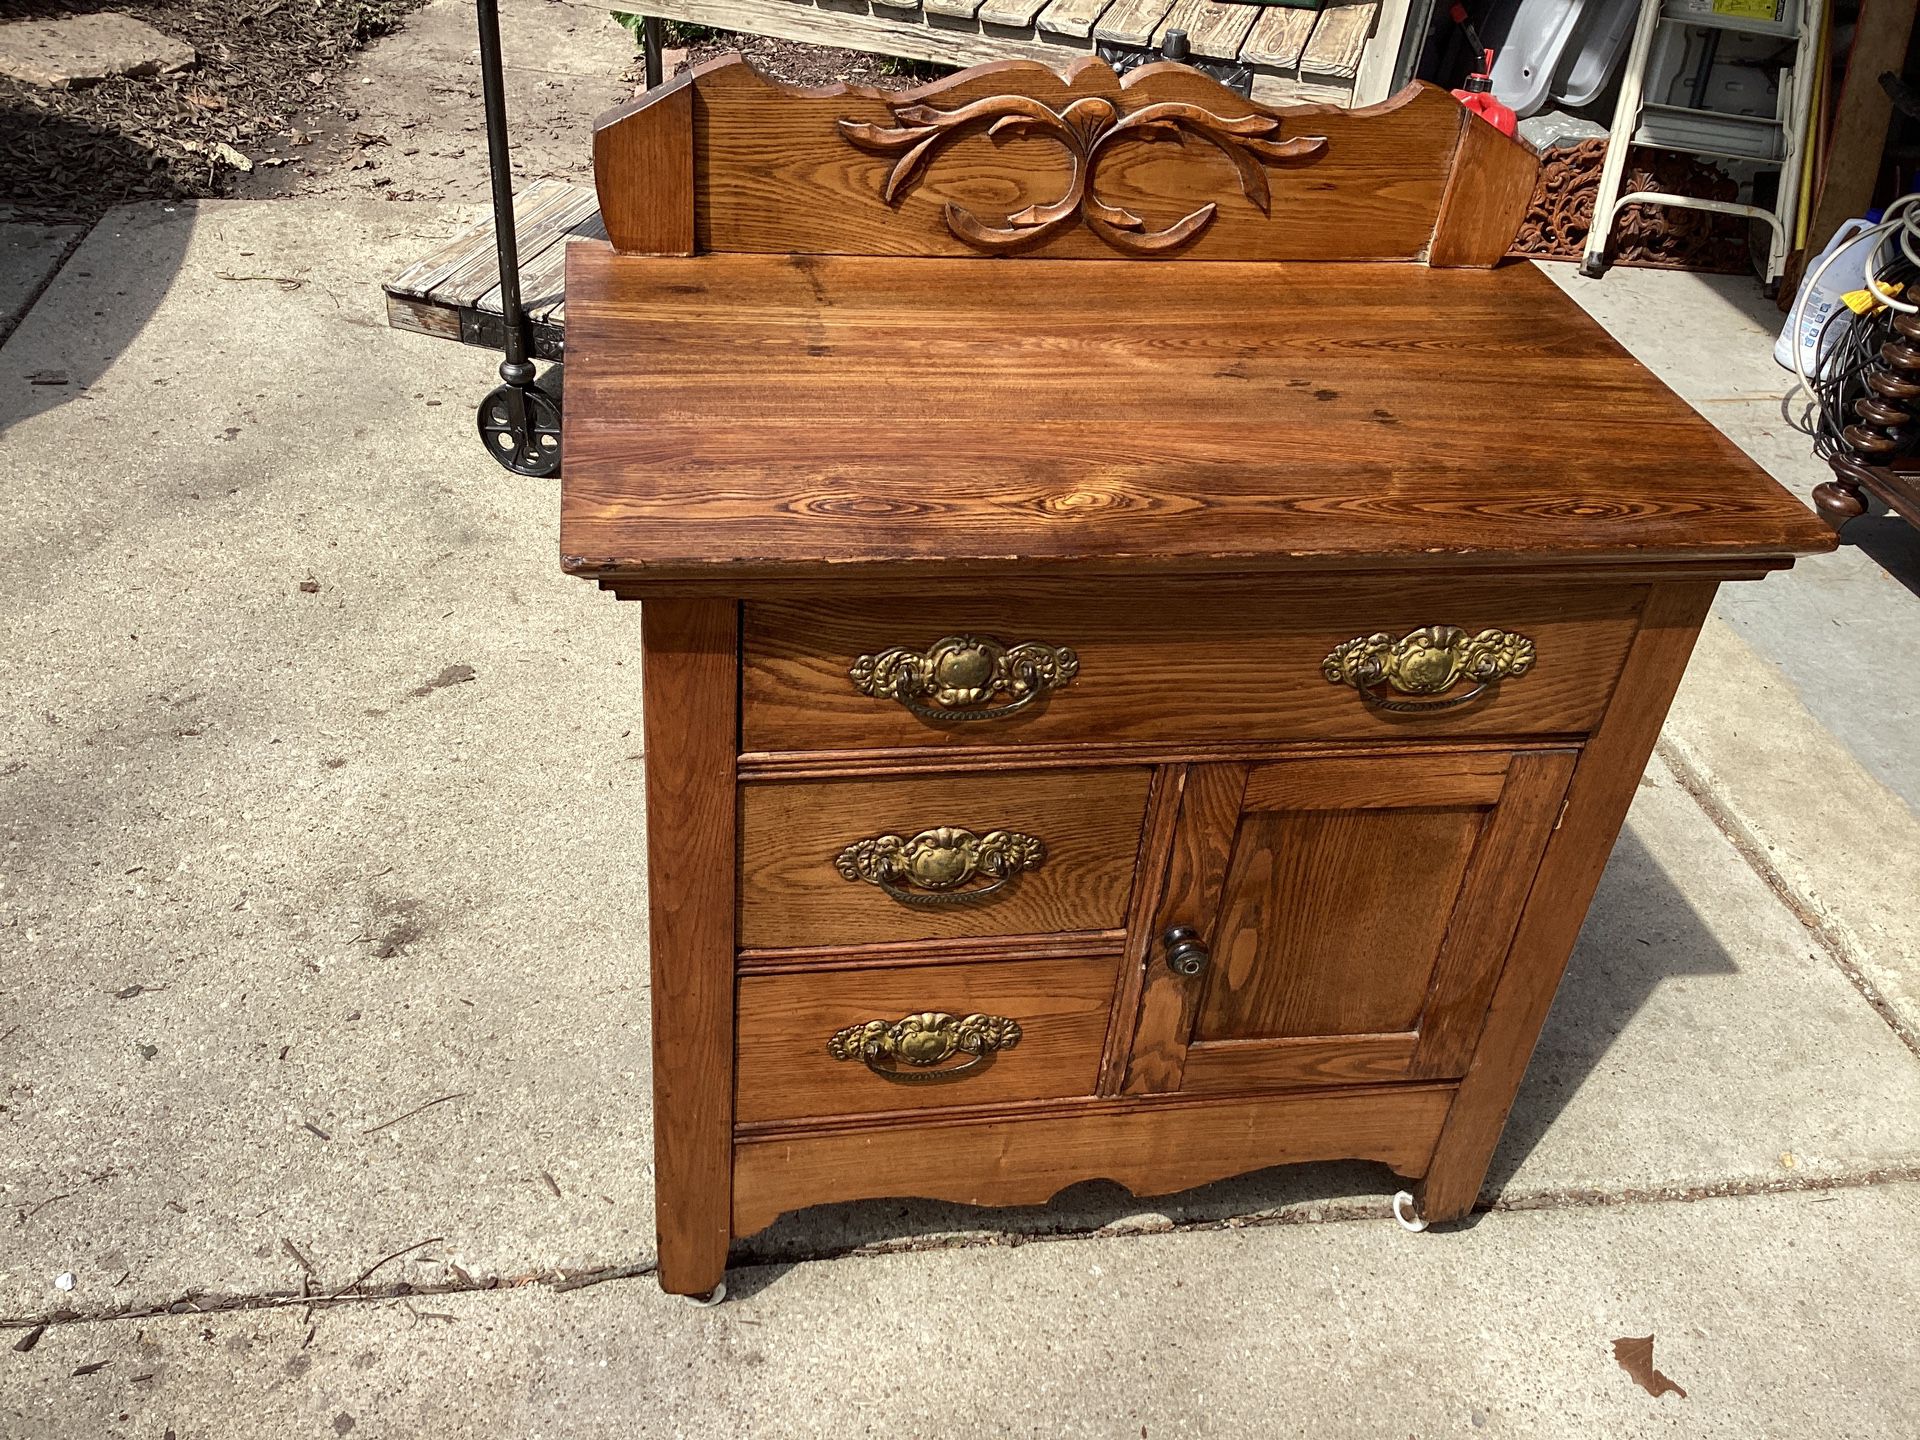 Vintage cabinet original pulls barn wood carved 3 drawers 1 door opens storage on casters …30.5  long—- 18 deep —- 32 tall. This is Americana treasure